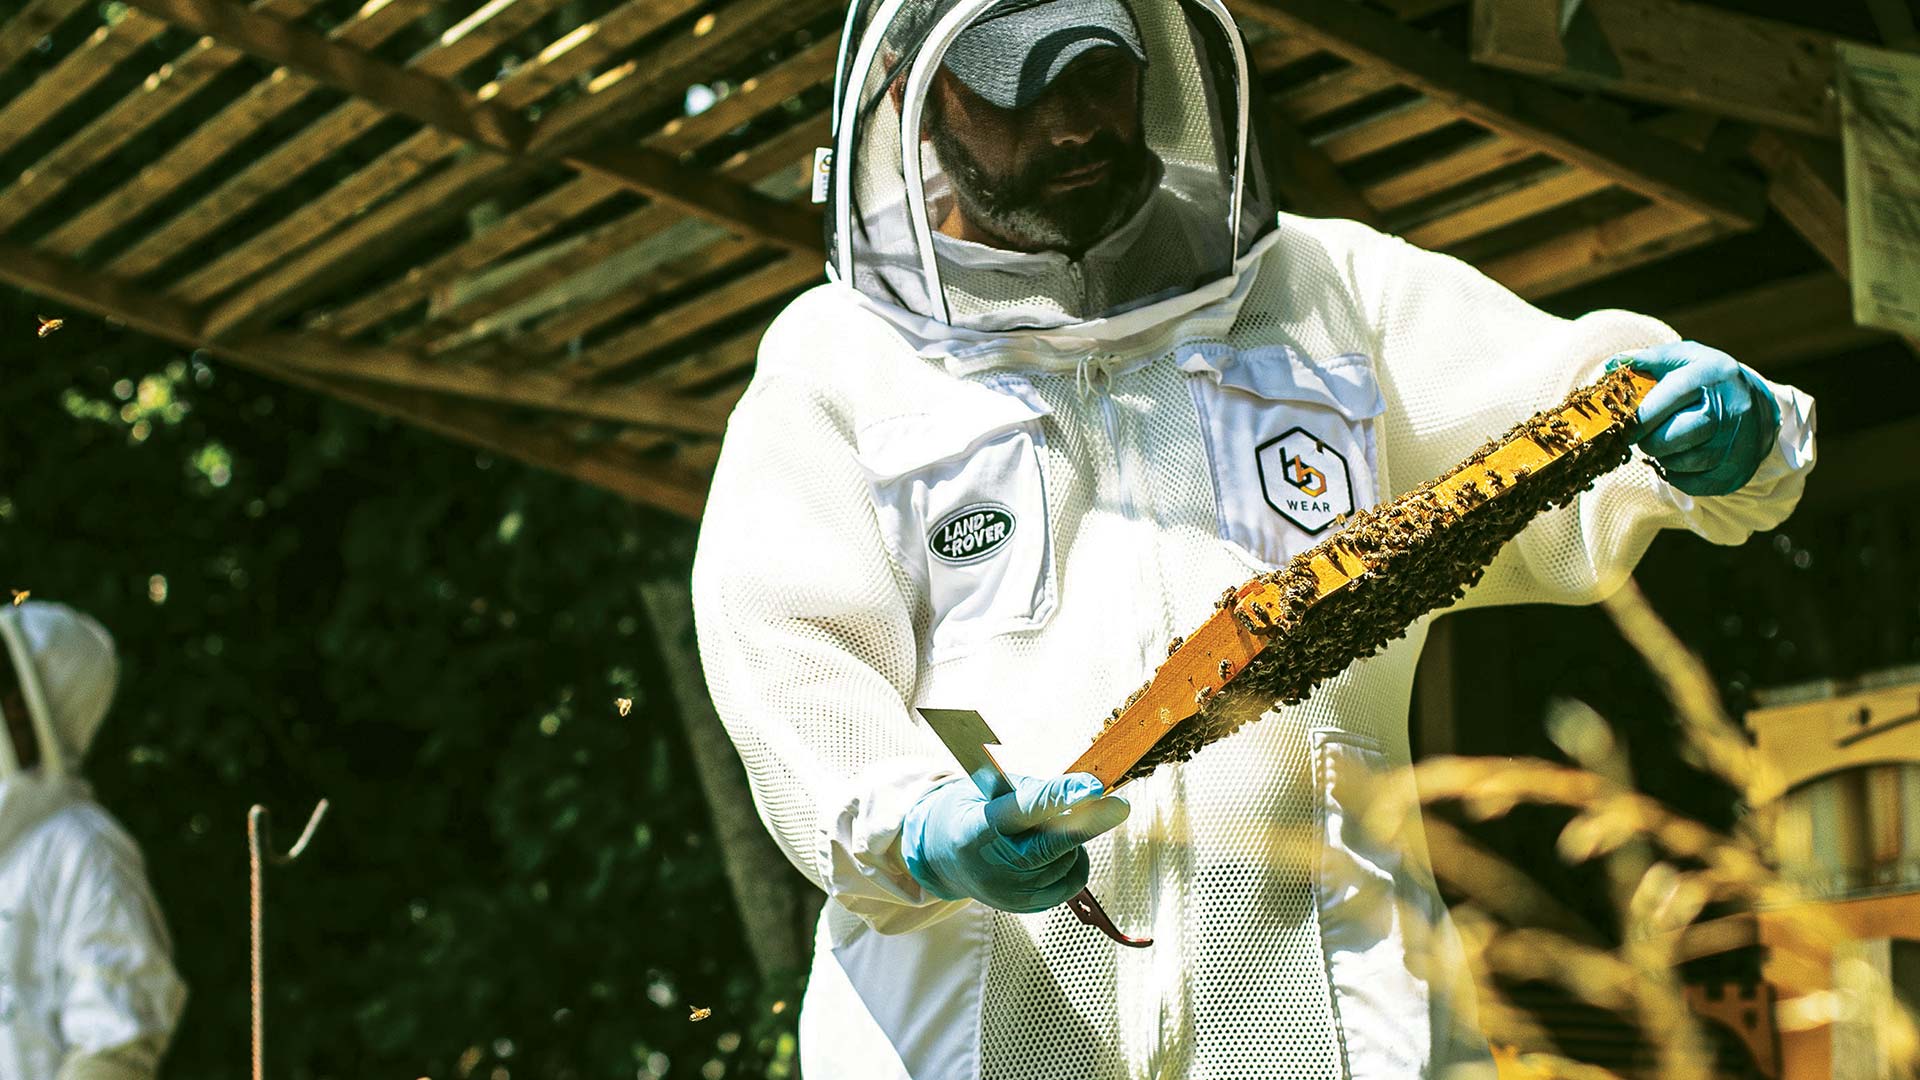 JLR employees wellness in nature, beekeeping